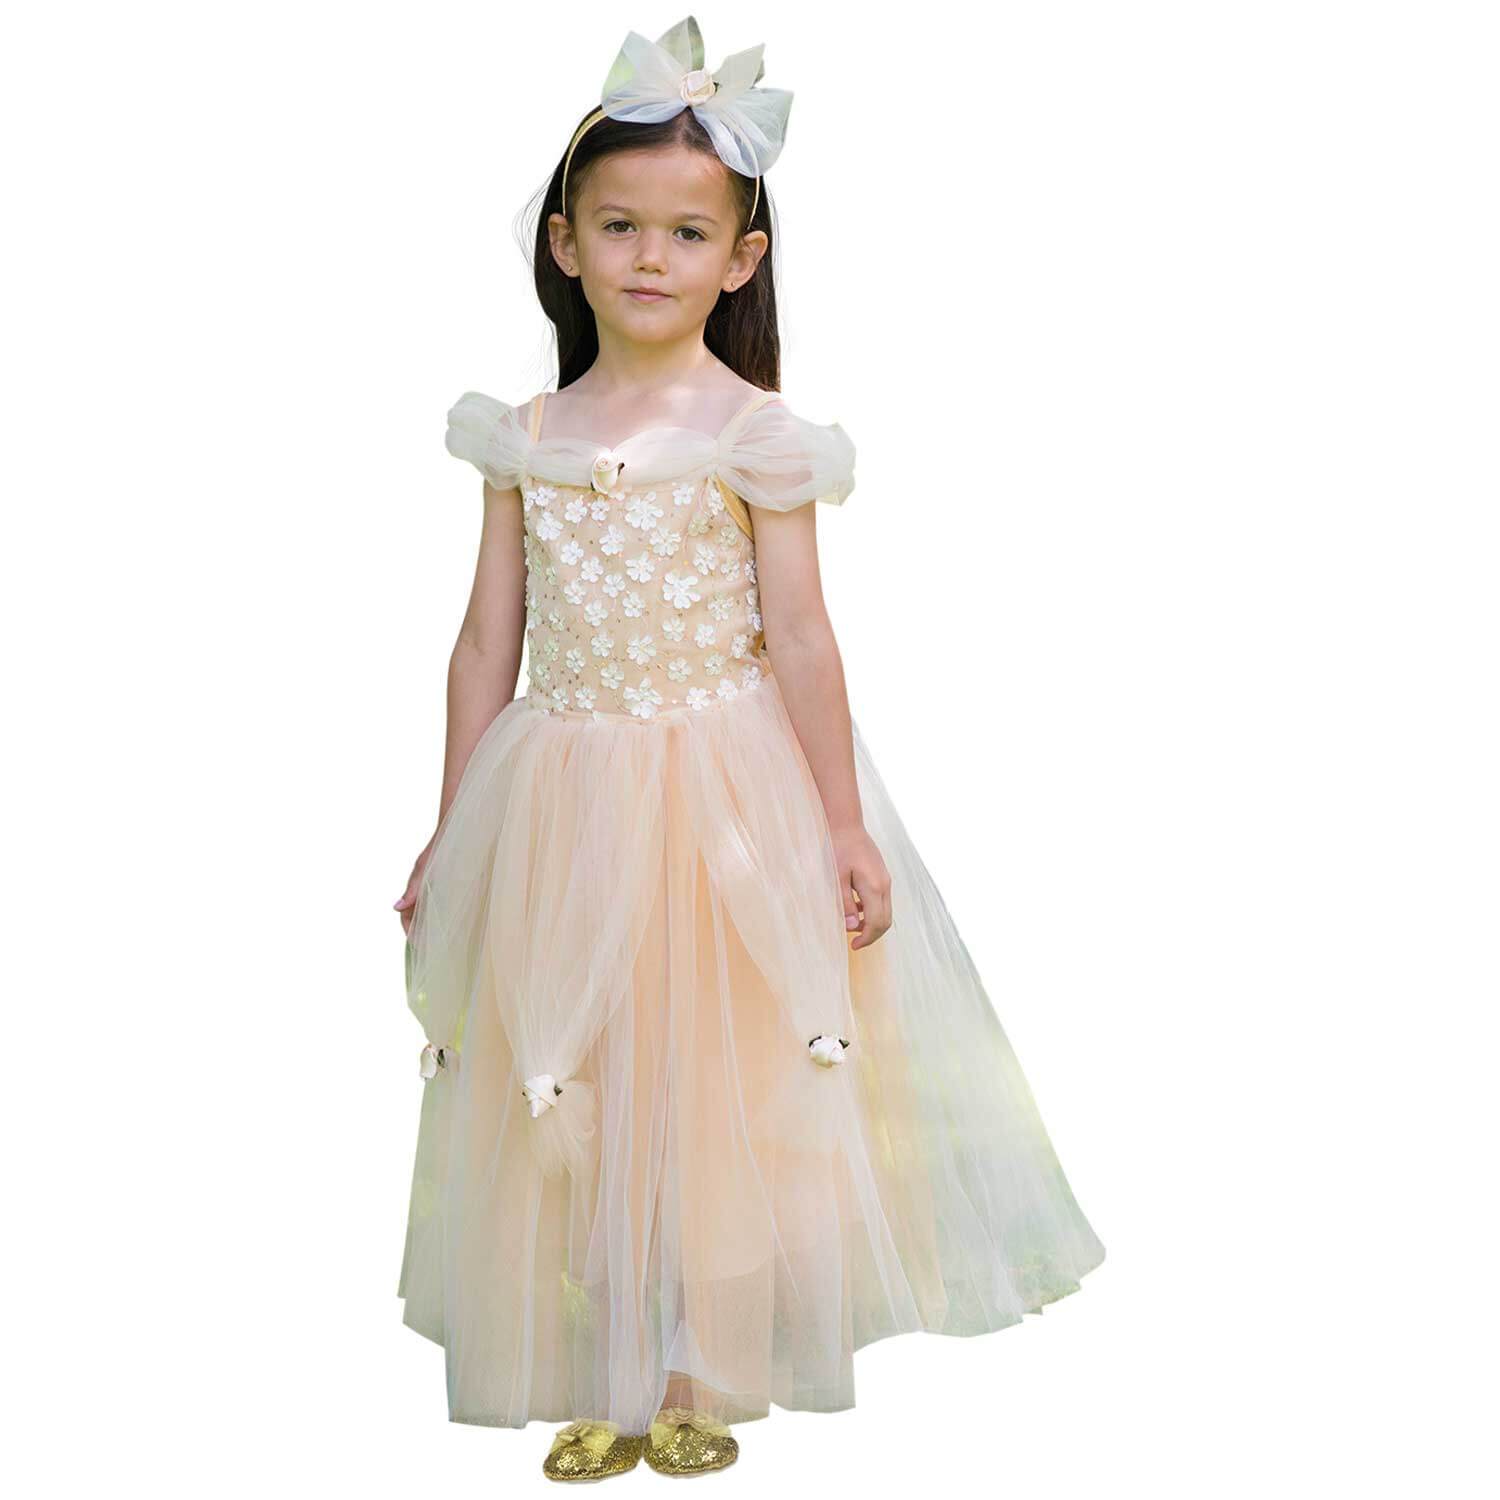 Child Golden Princess Costume Costumes & Apparel - Party Centre